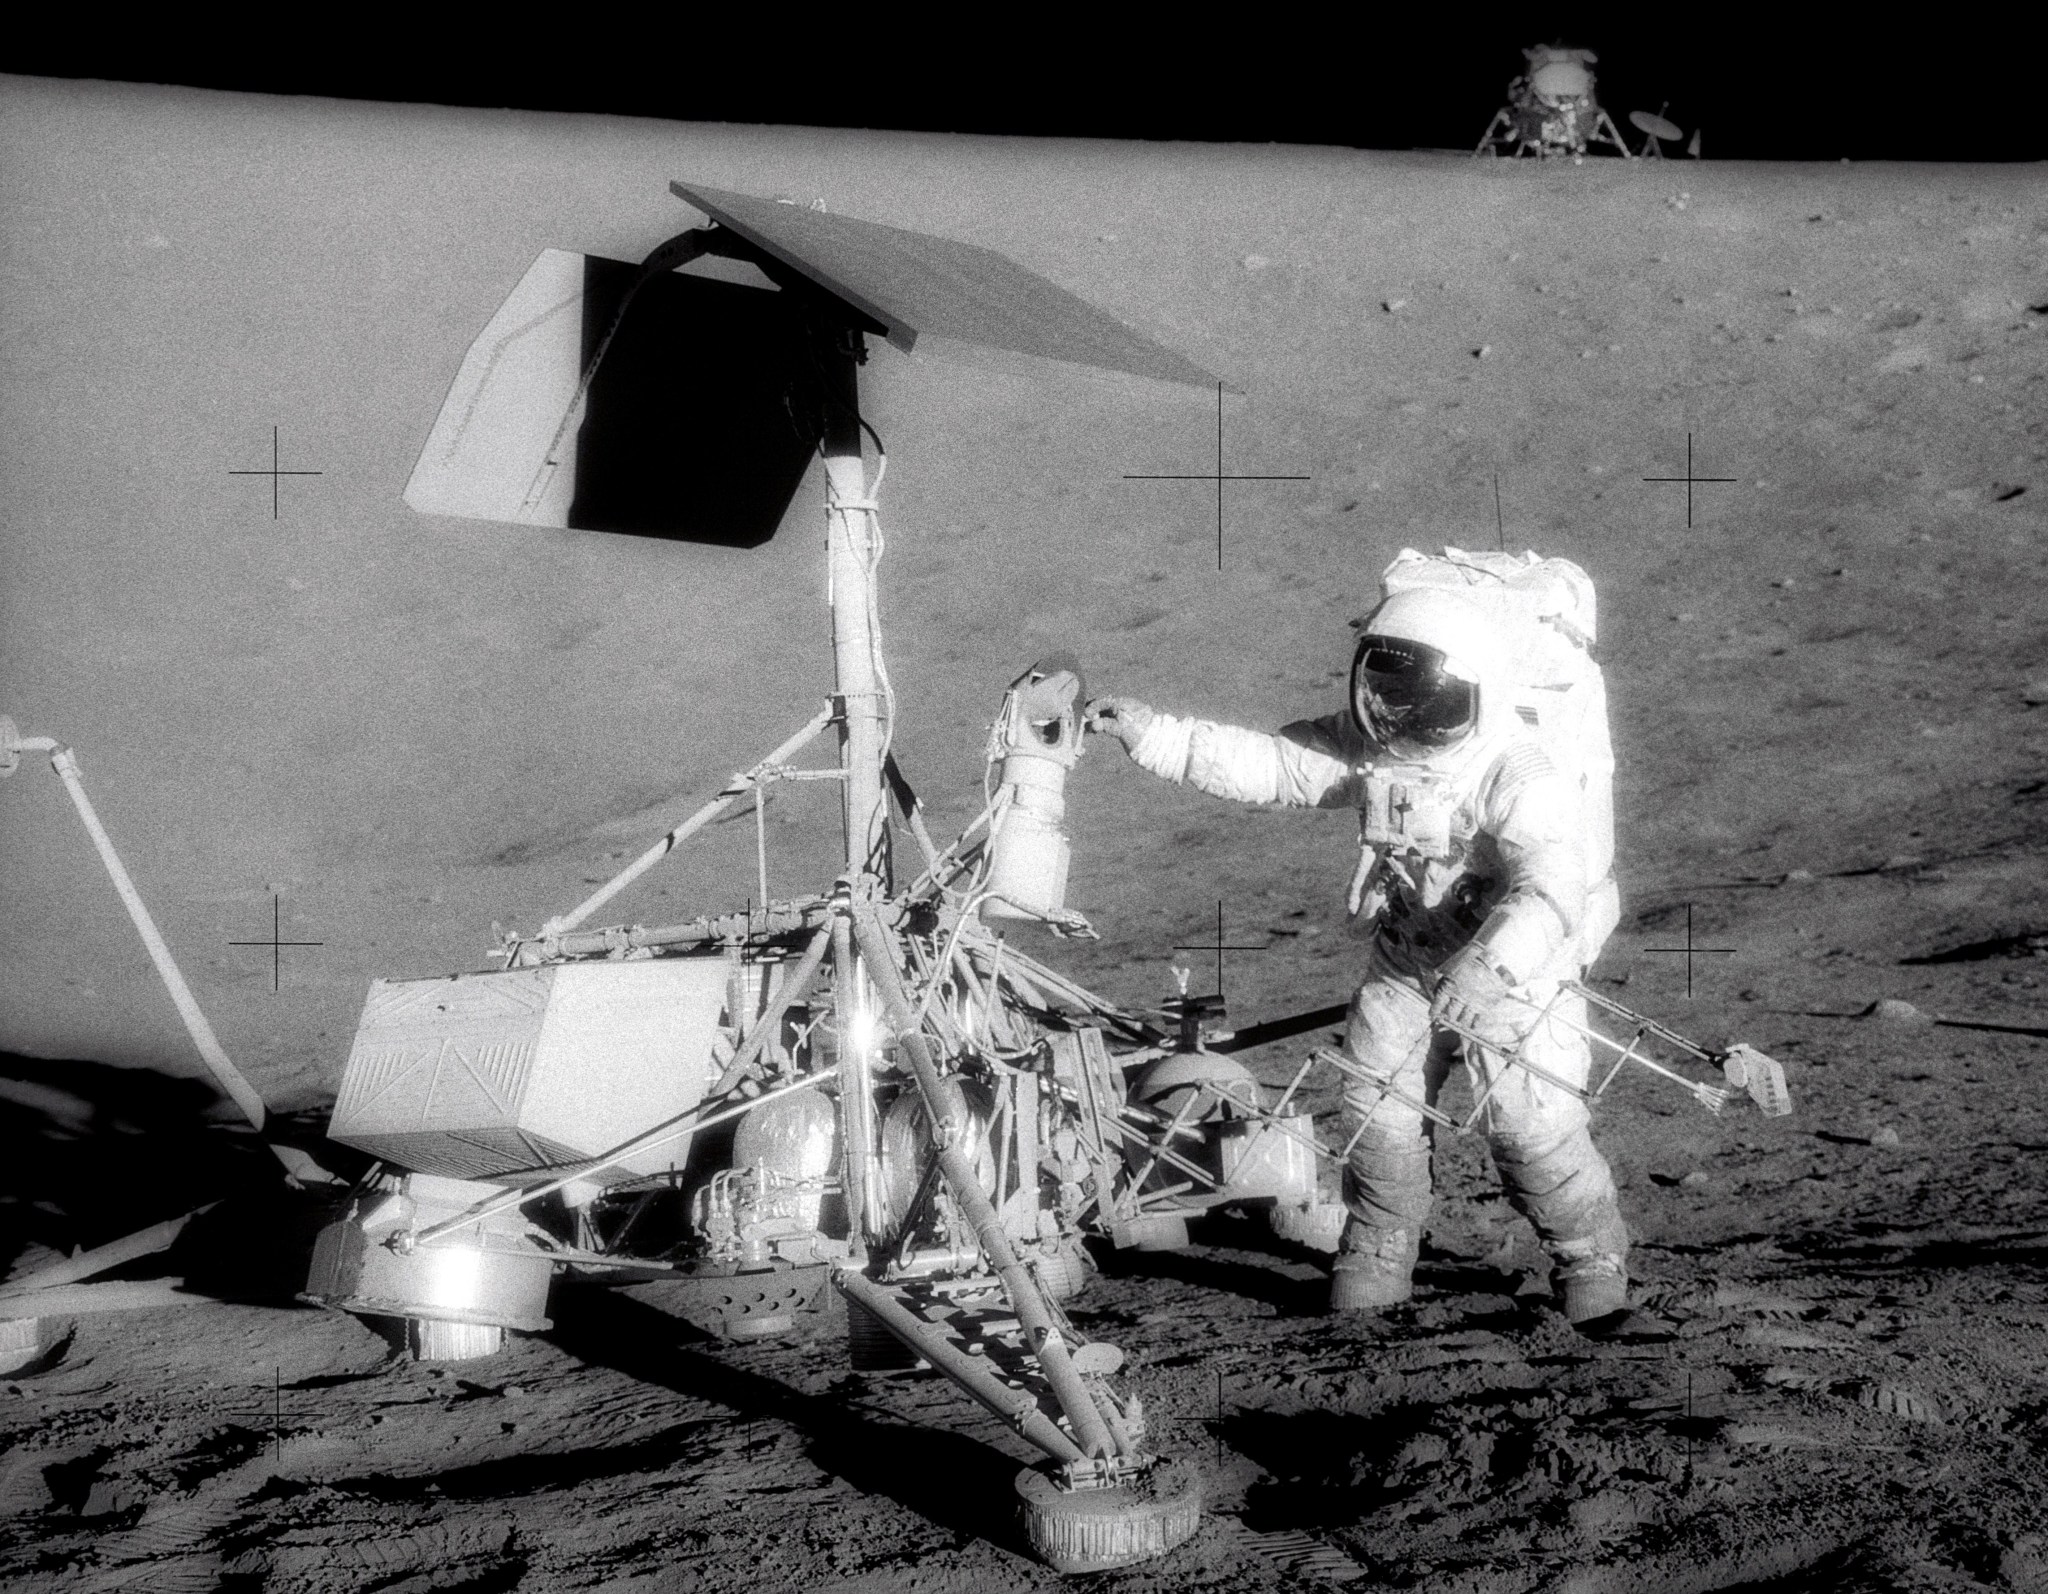 Astronaut on moon inspecting equipment.